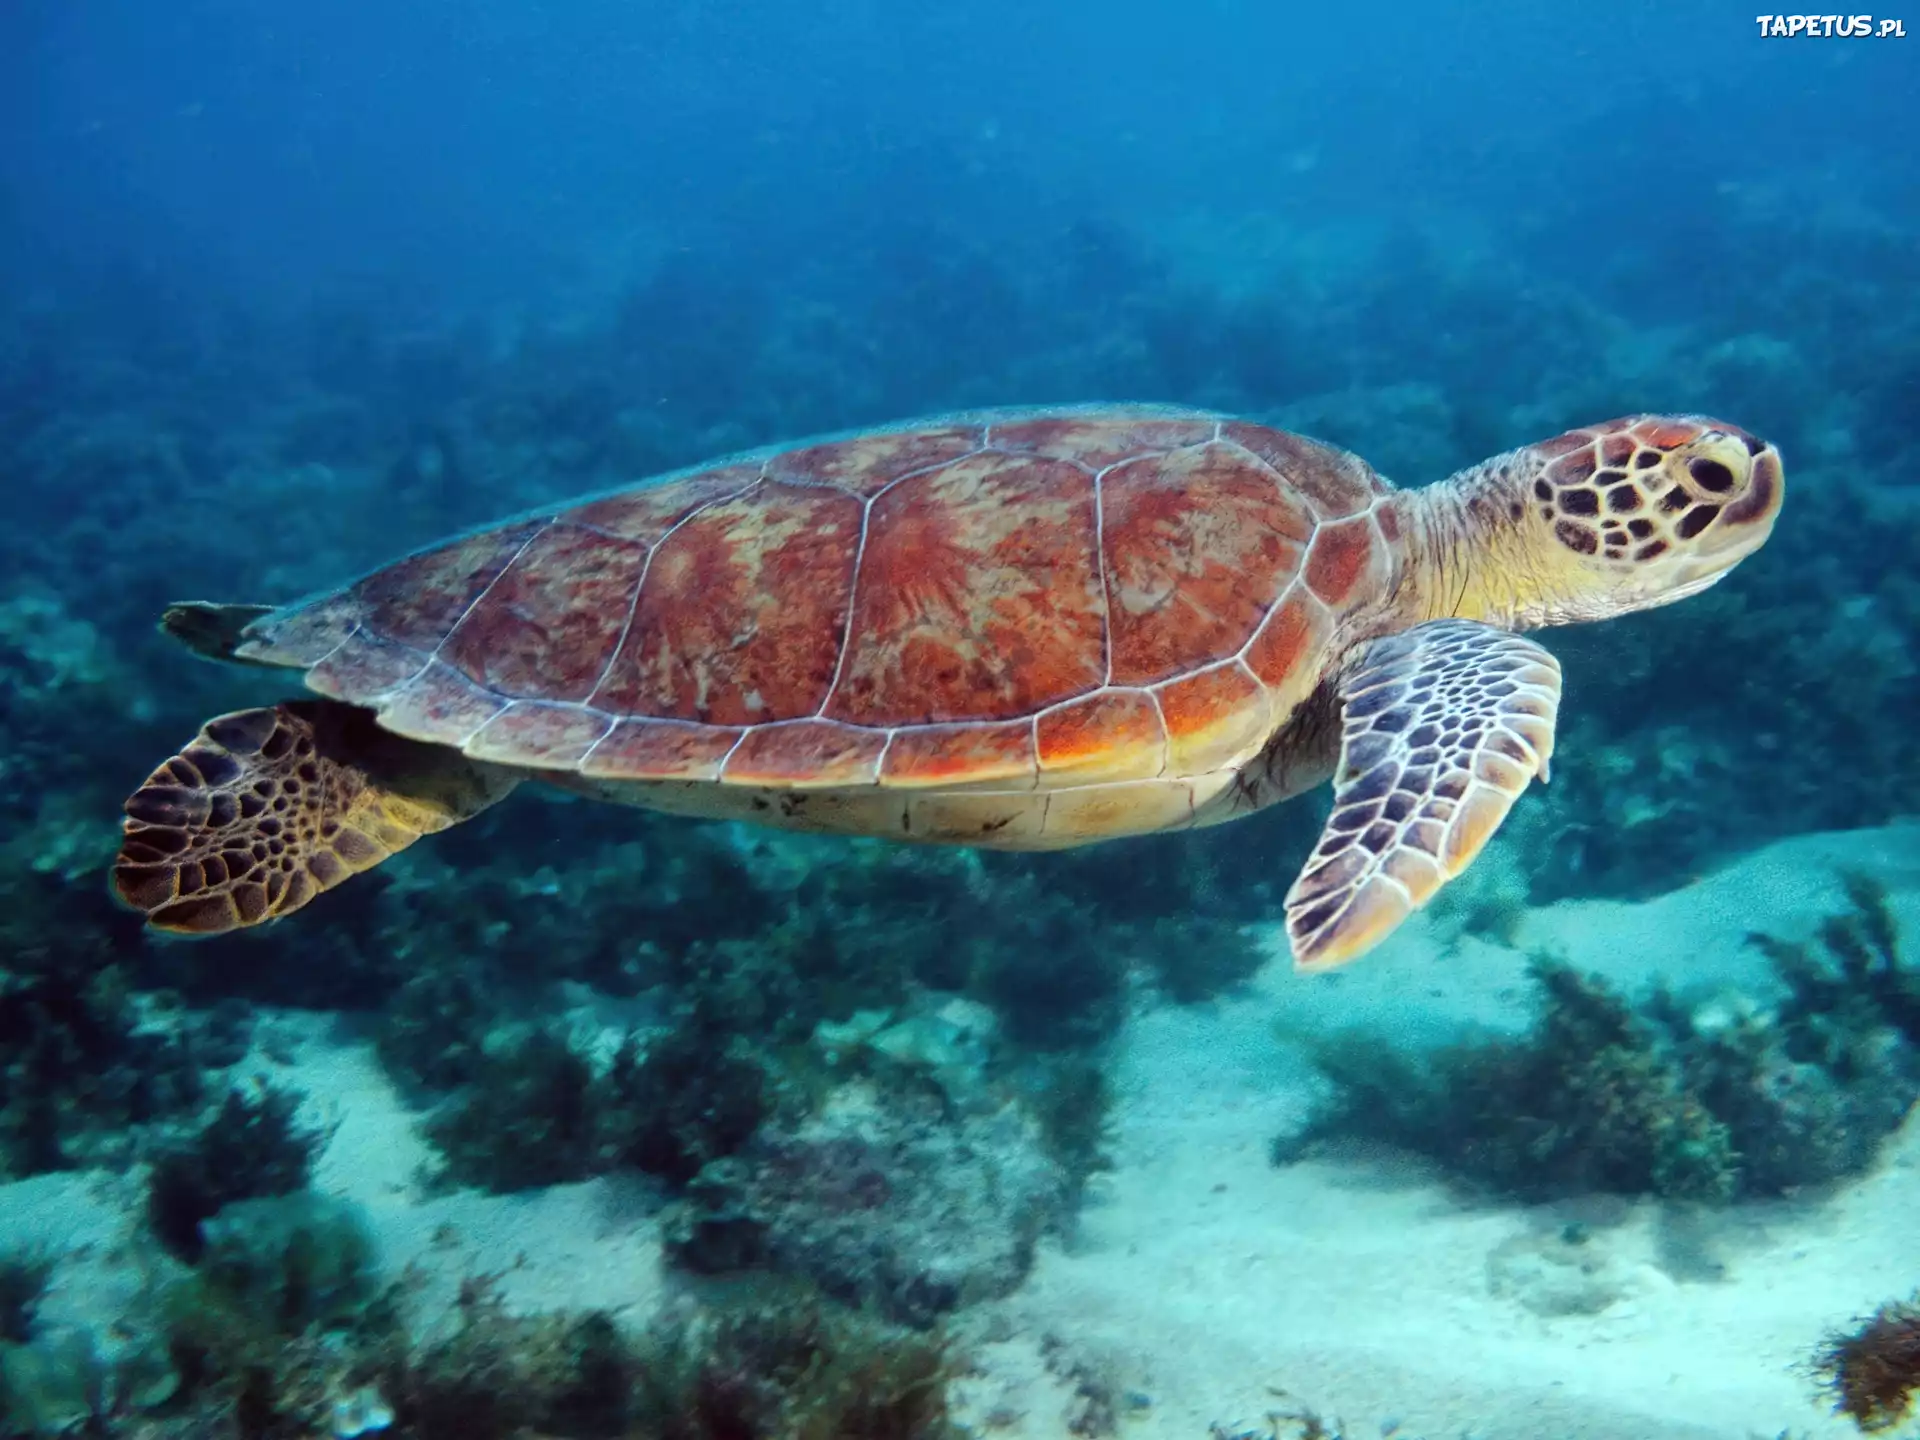 Turtle x. Морская черепаха бисса. Черепаха Каретта-Каретта. Зеленая (суповая морская черепаха). Морская черепаха бисса настоящая Каретта.